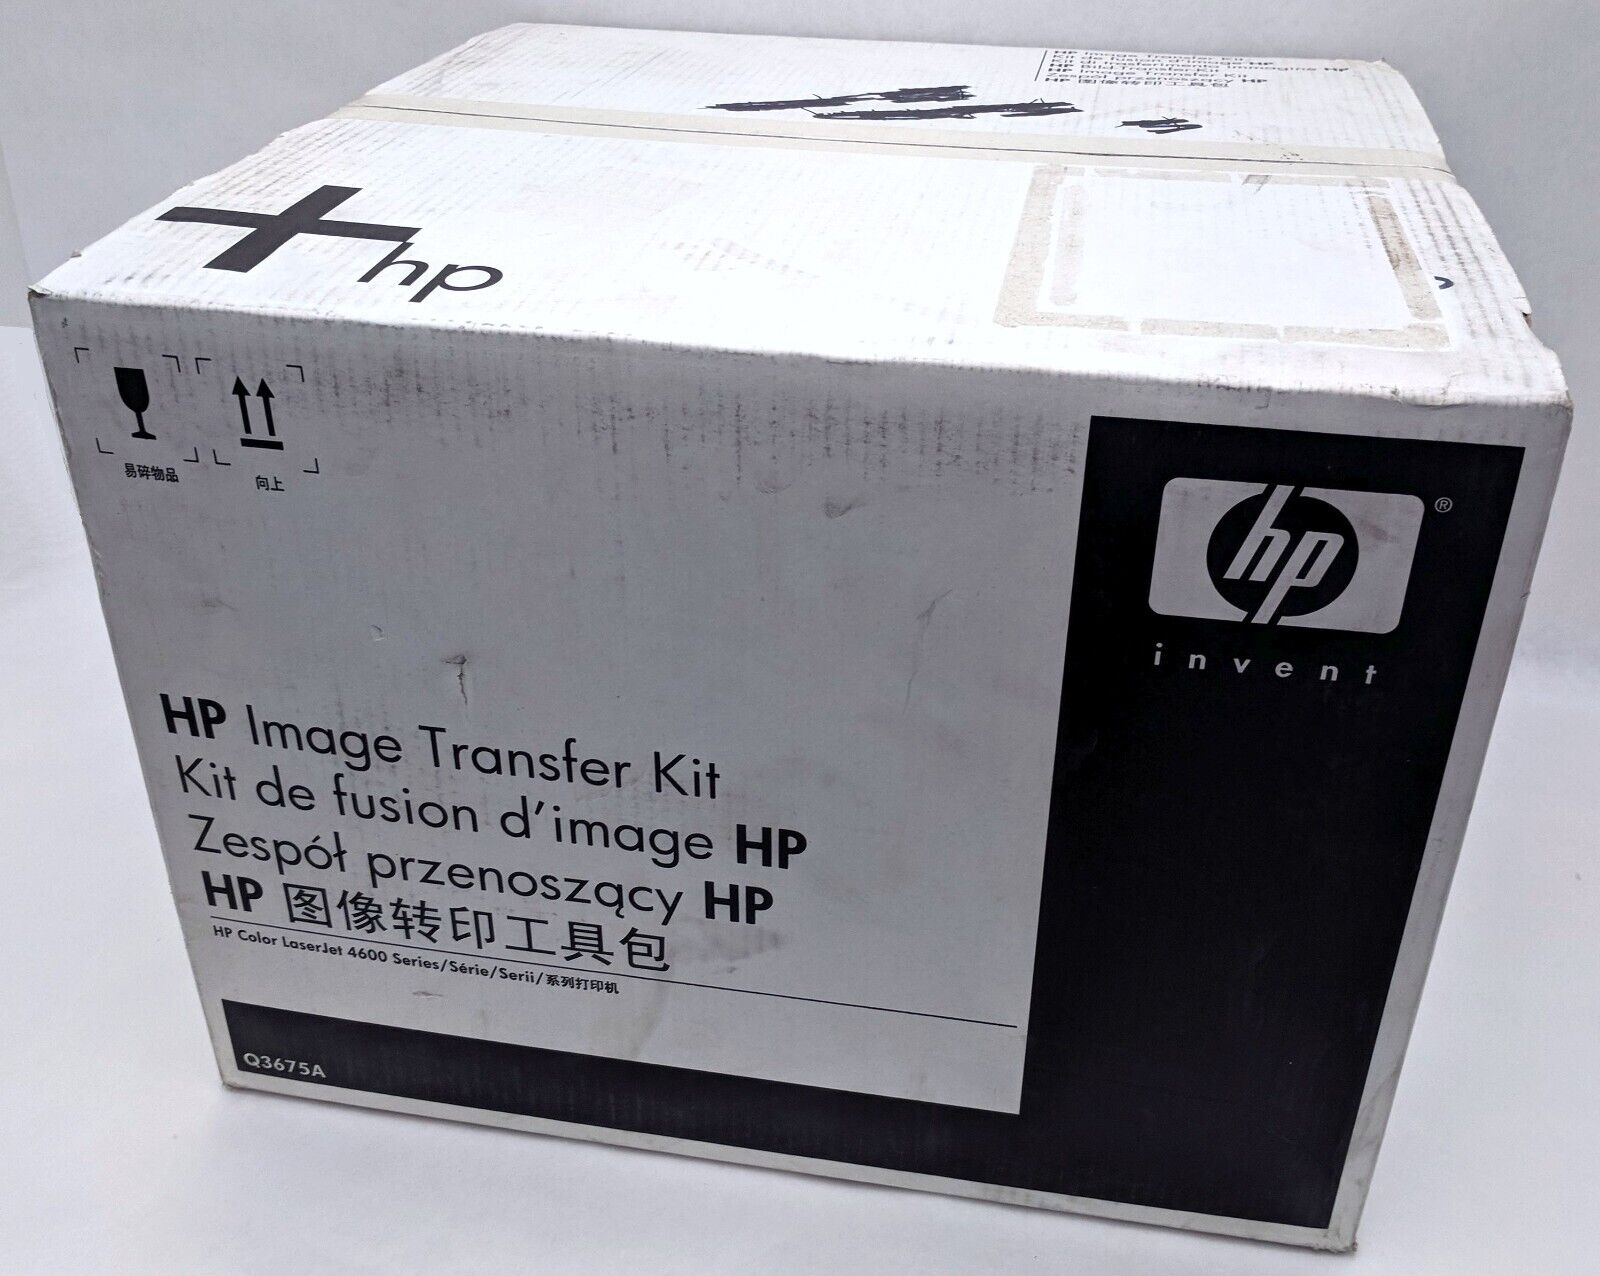 NEW Genuine HP Q3675A Image Transfer Kit for Color LaserJet Printer 4600 Series